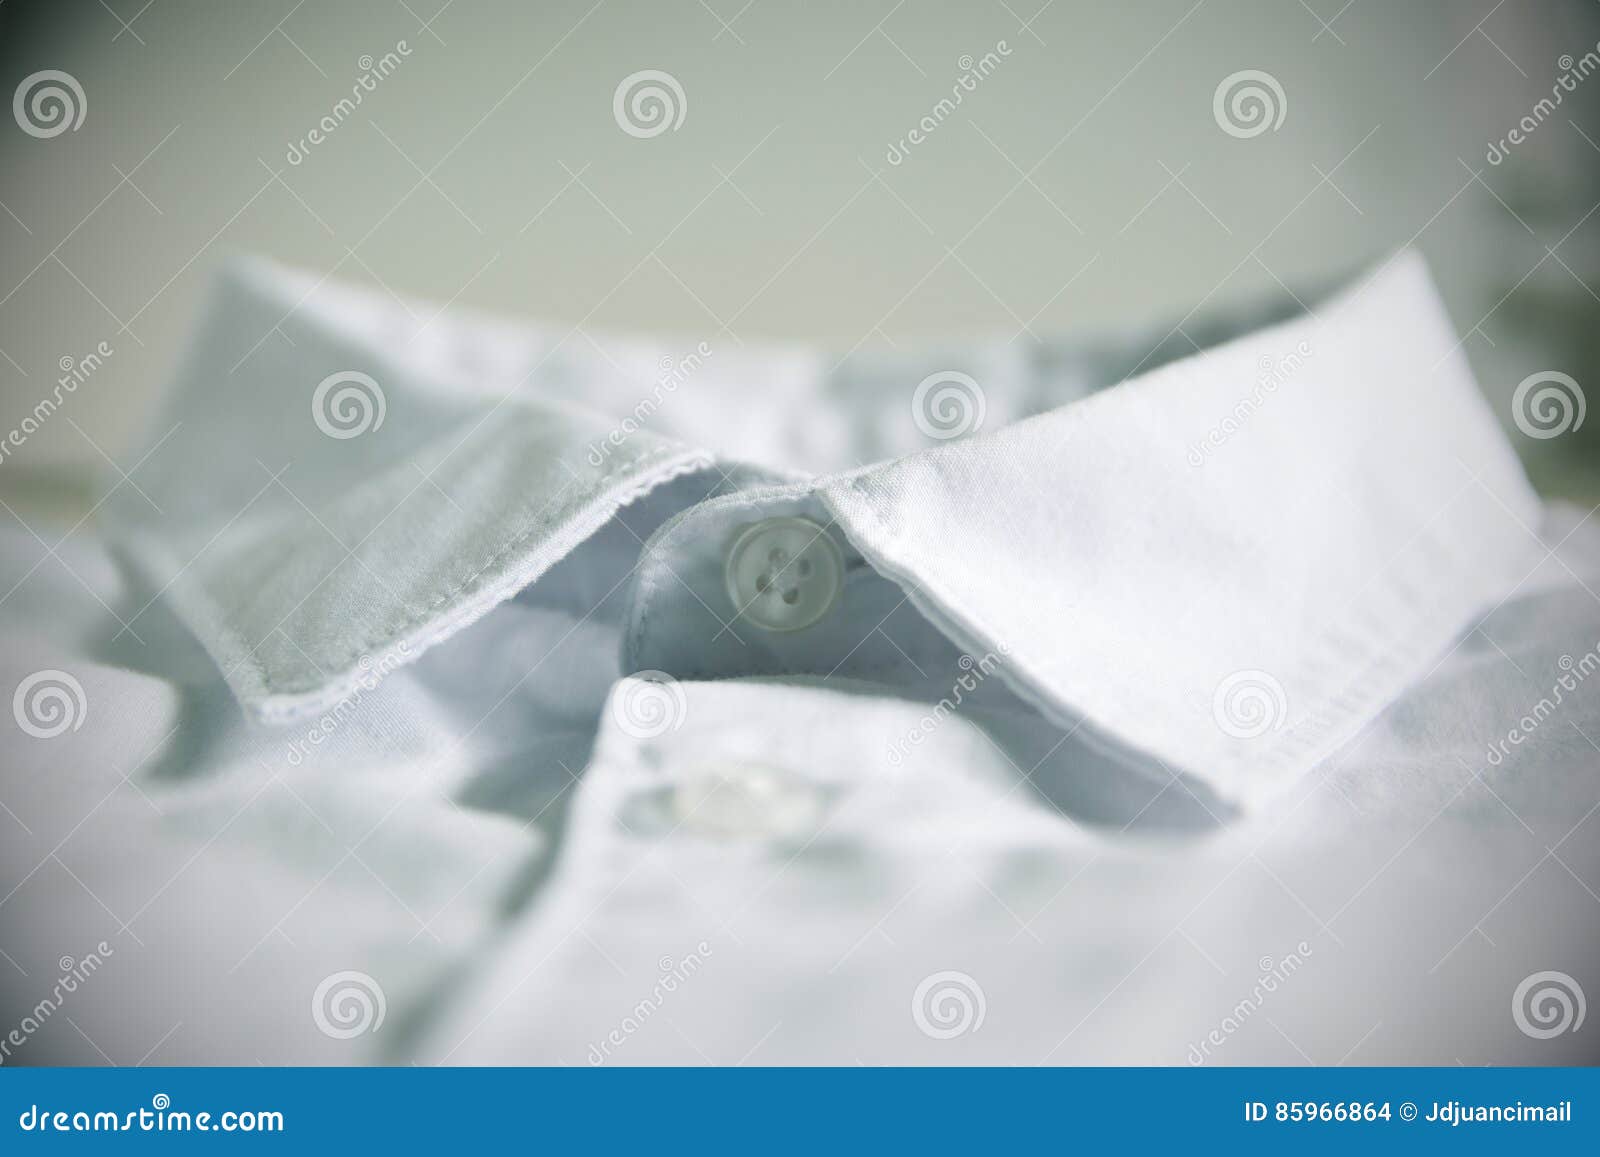 White Shirt Collar Neck Detail. Clothing Background Stock Photo - Image ...